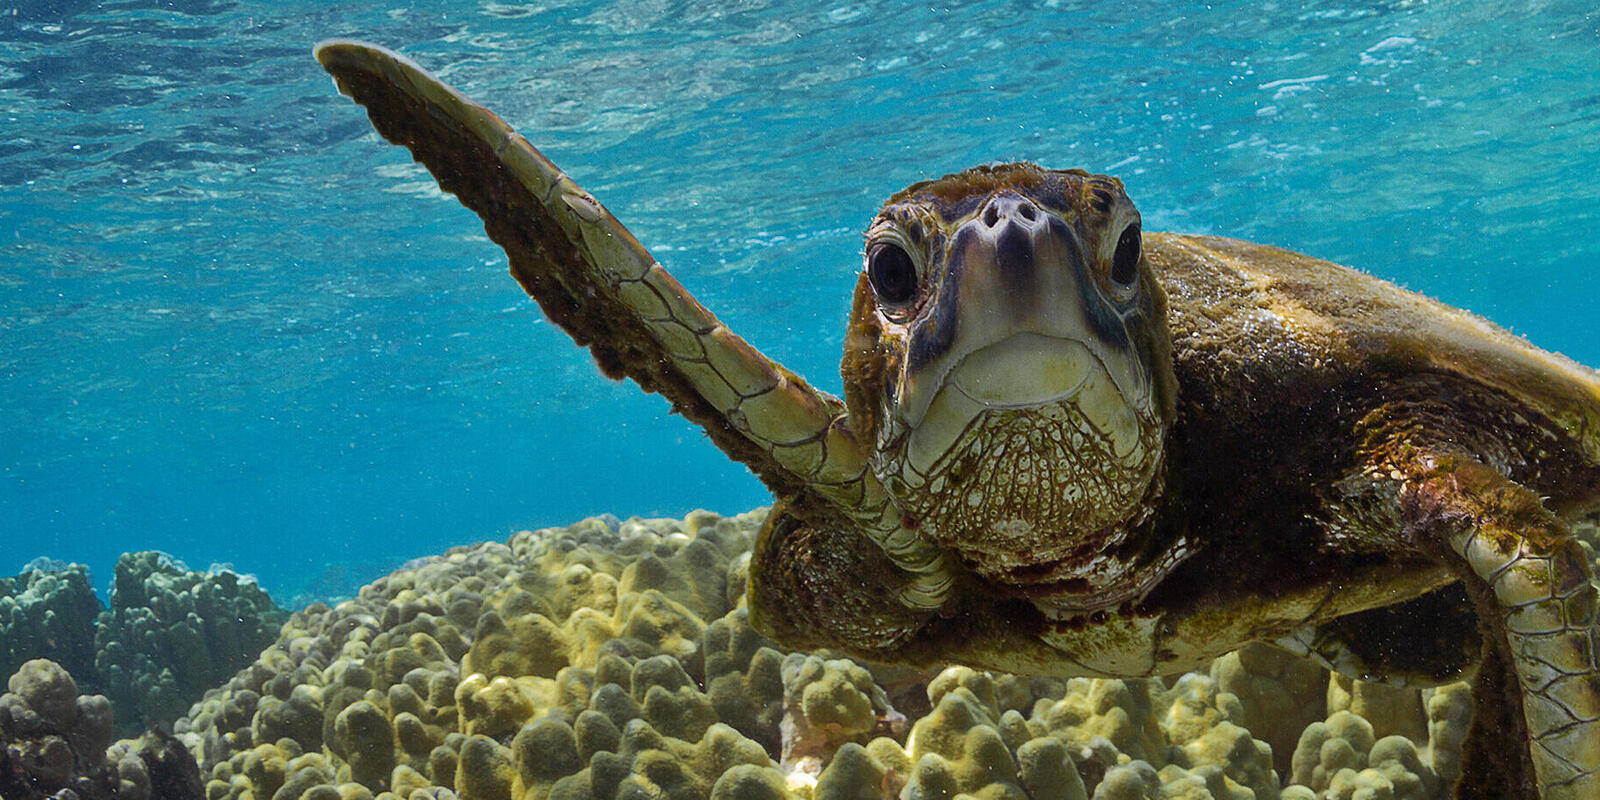 How long do sea turtles live